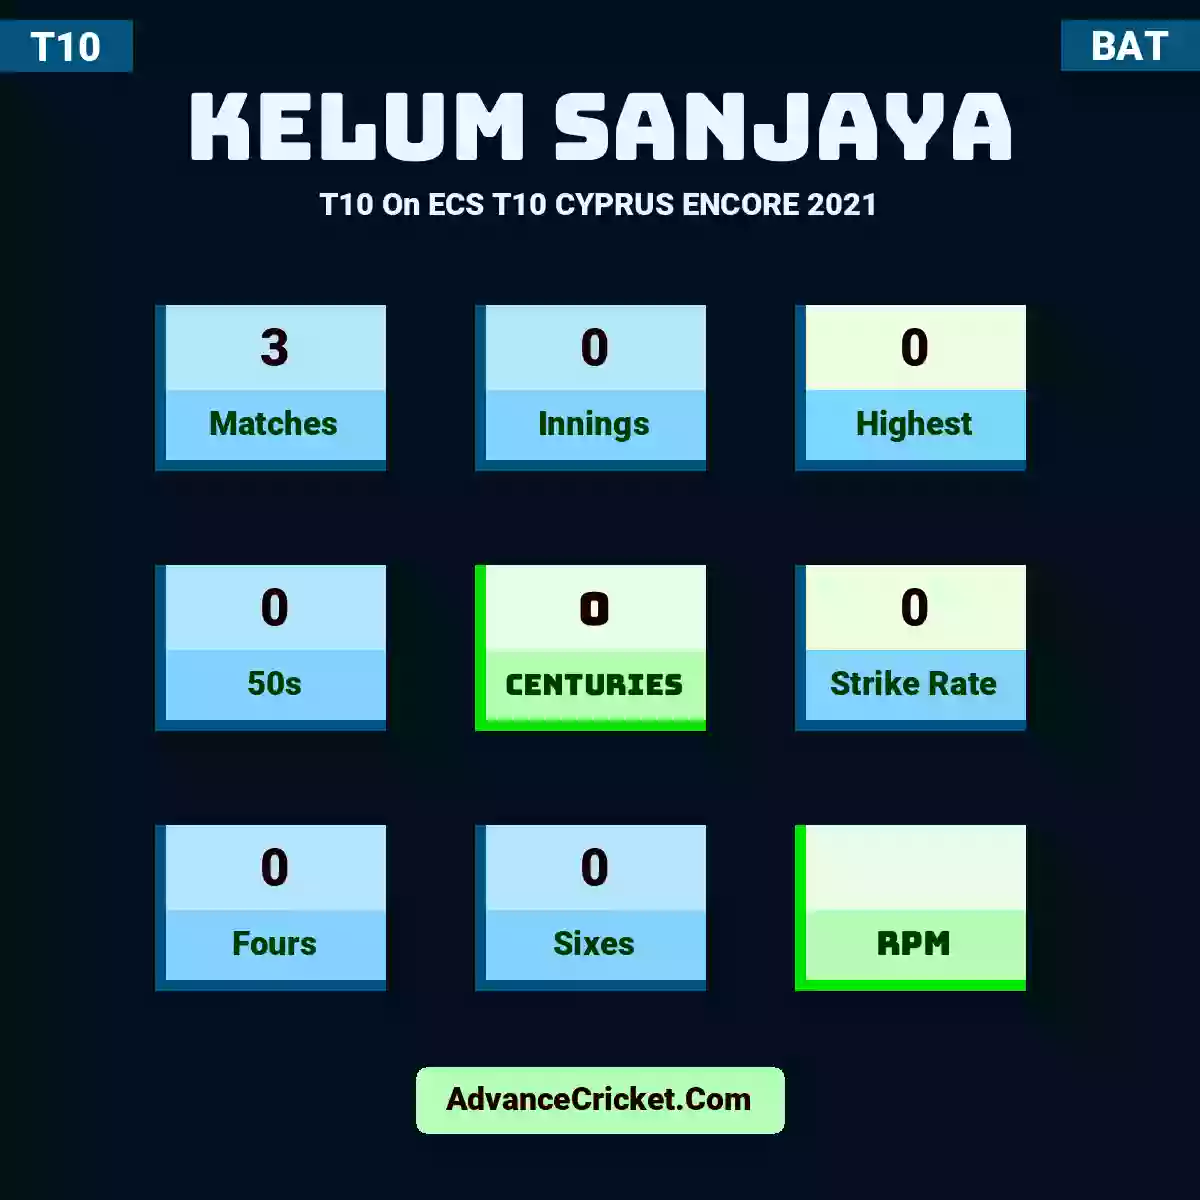 Kelum Sanjaya T10  On ECS T10 CYPRUS ENCORE 2021, Kelum Sanjaya played 3 matches, scored 0 runs as highest, 0 half-centuries, and 0 centuries, with a strike rate of 0. K.Sanjaya hit 0 fours and 0 sixes.